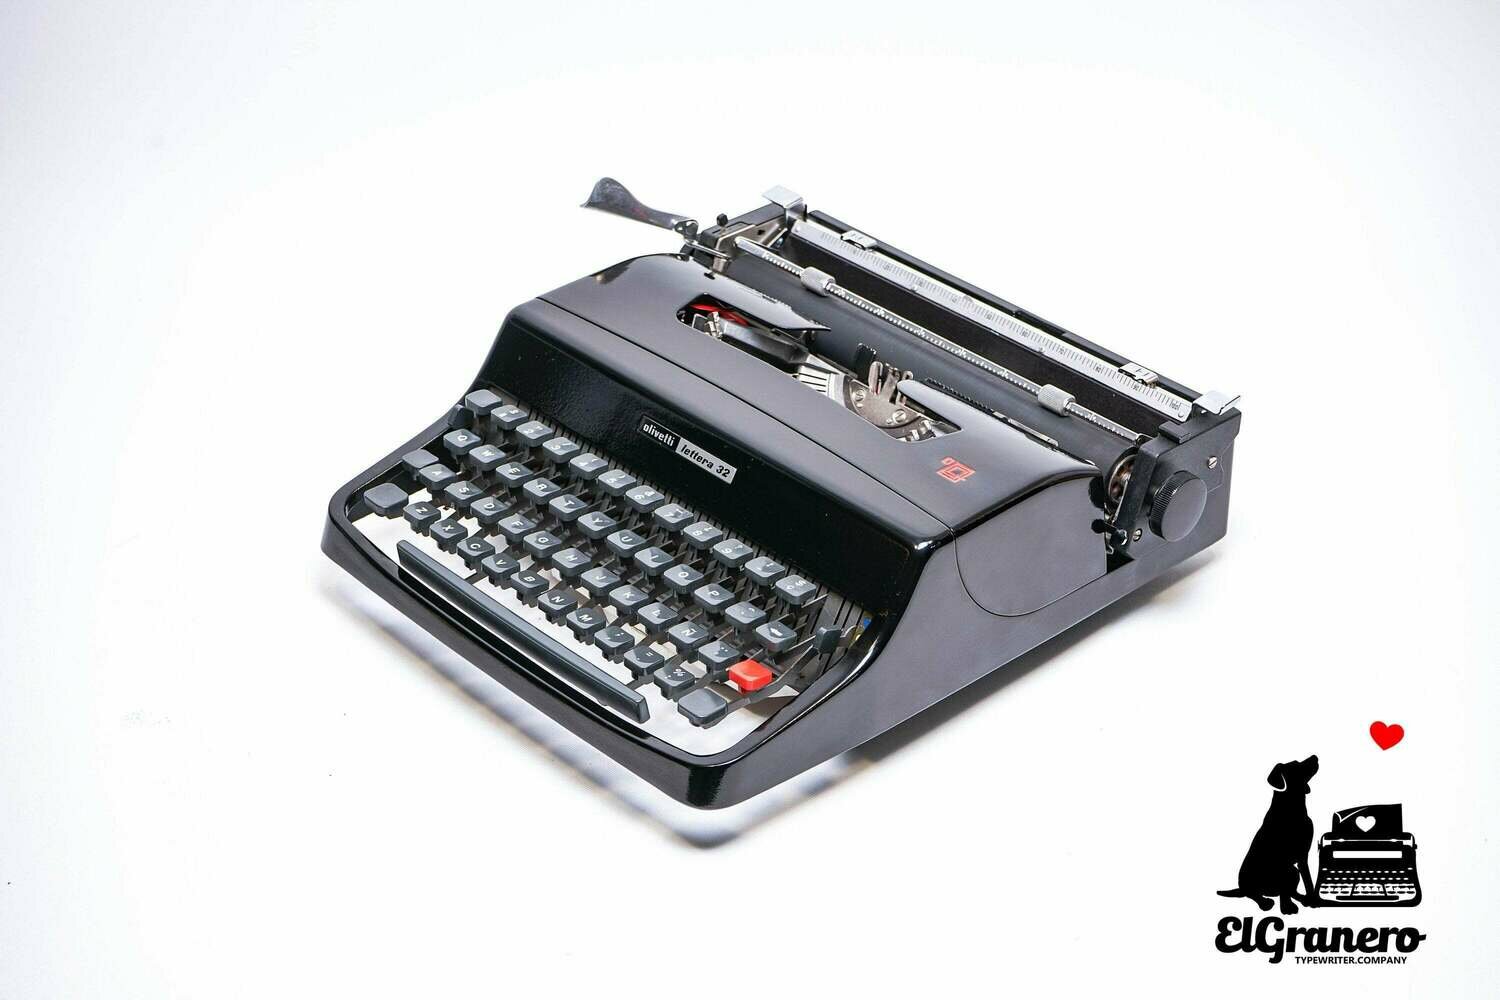 Olivetti Lettera 32 Black Typewriter